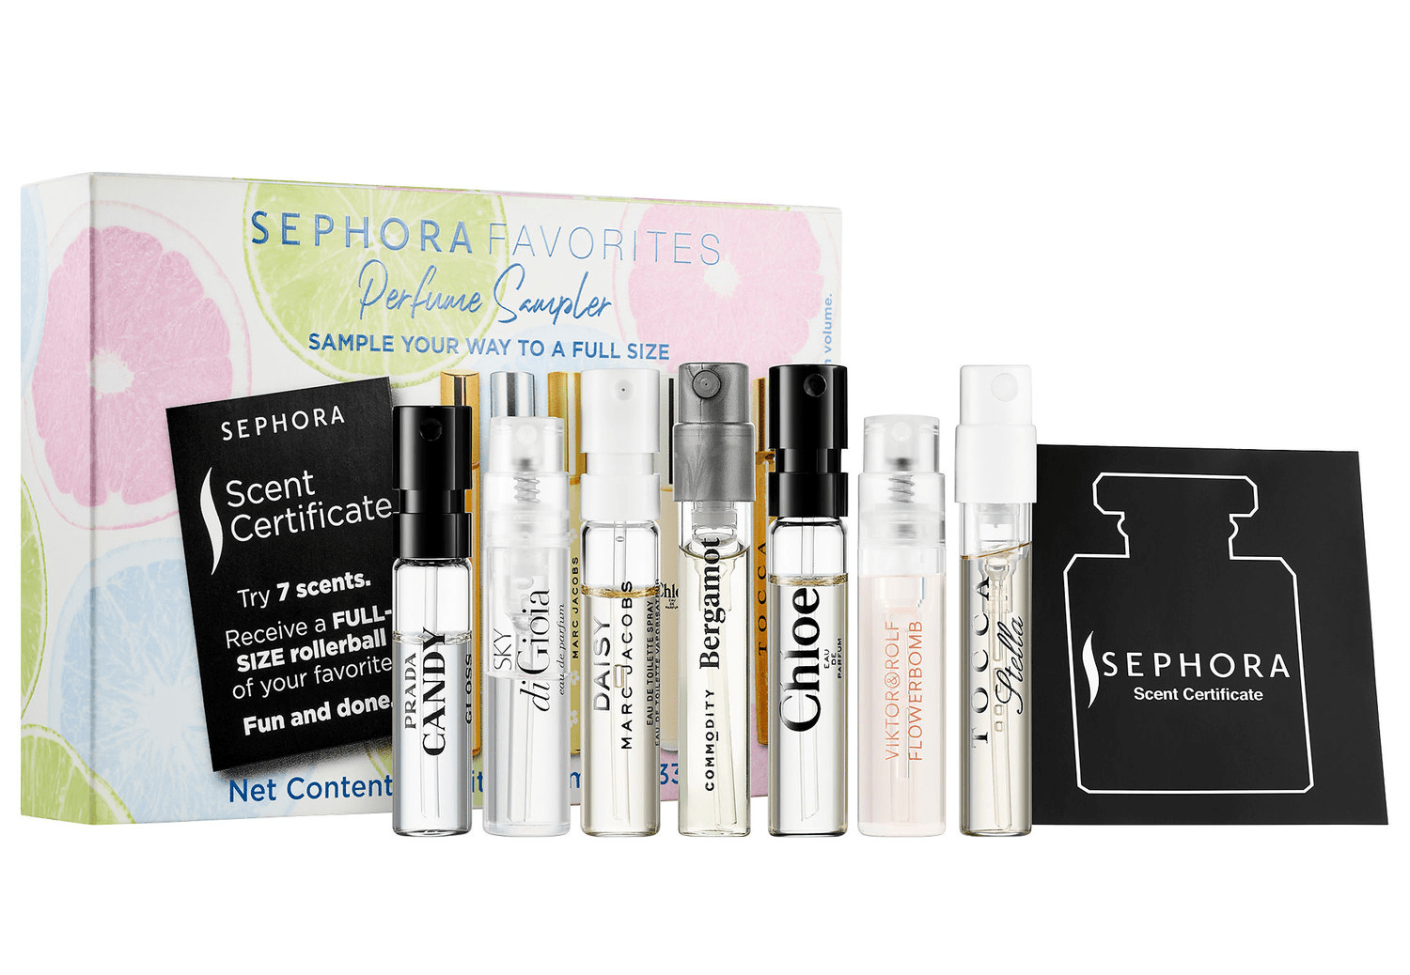 New Sephora Favorites Kits Available Now: Perfume Travel Sampler Kit ...